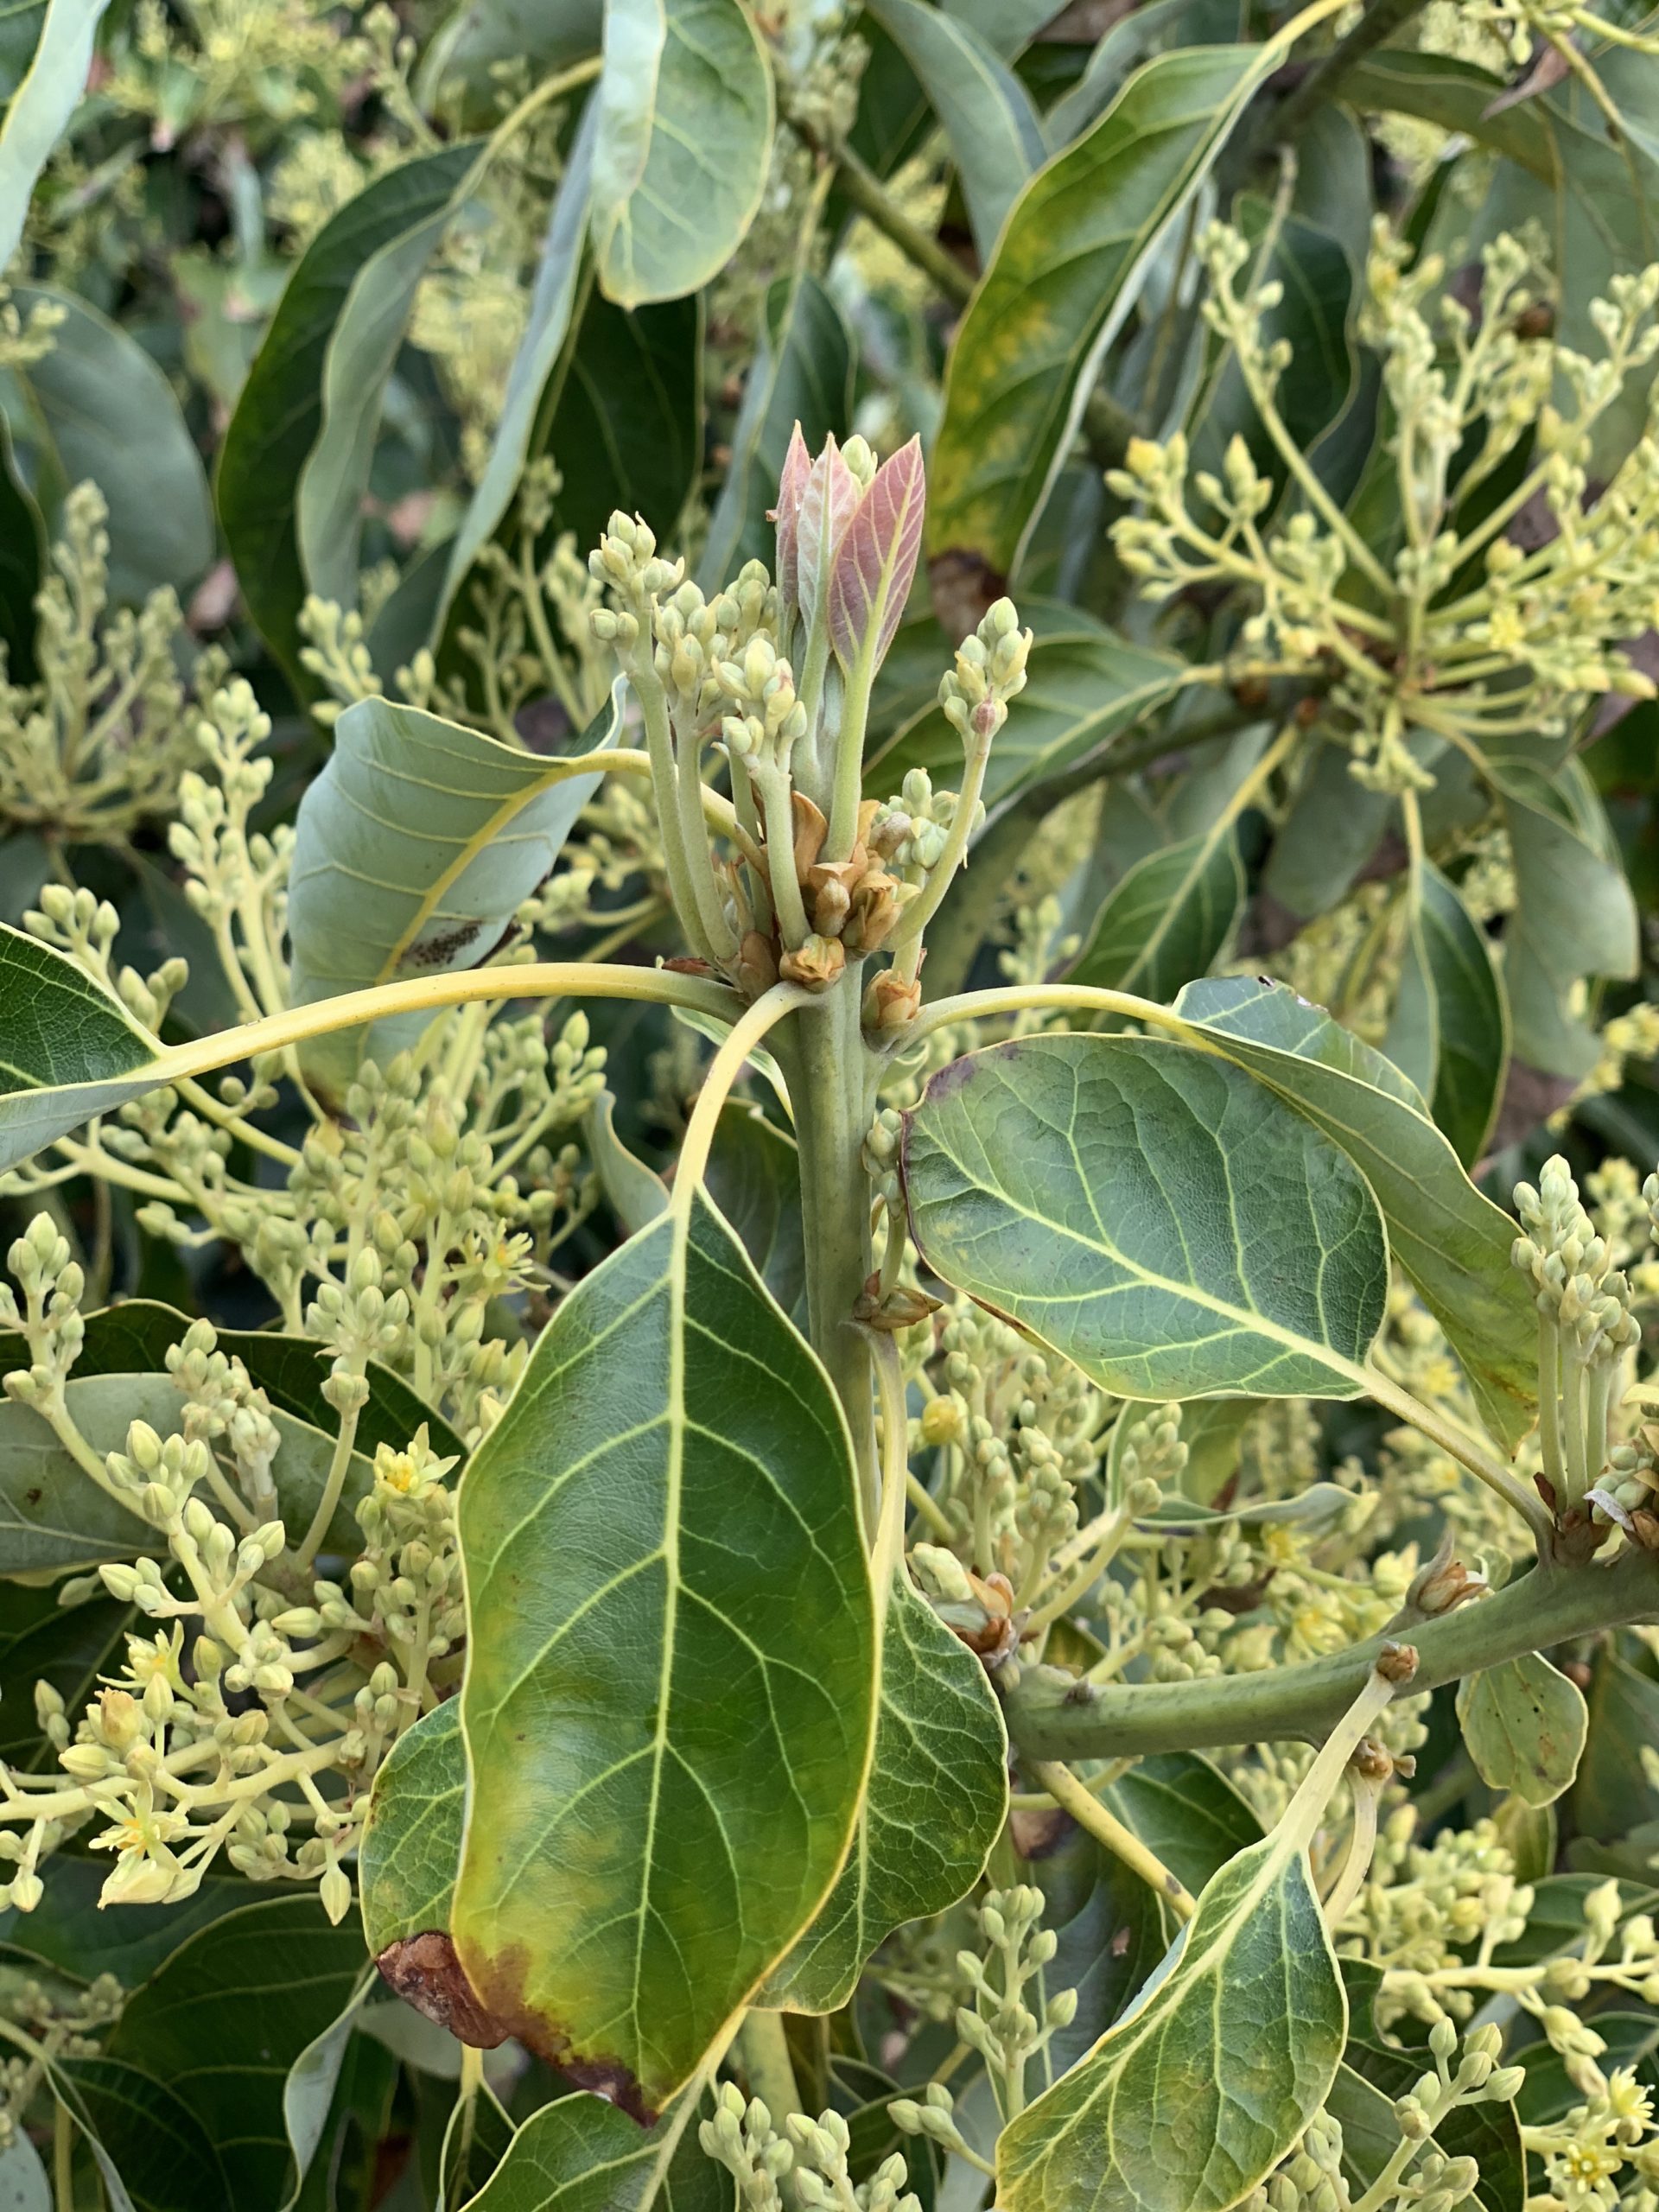 Buds become blossoms on avocado trees